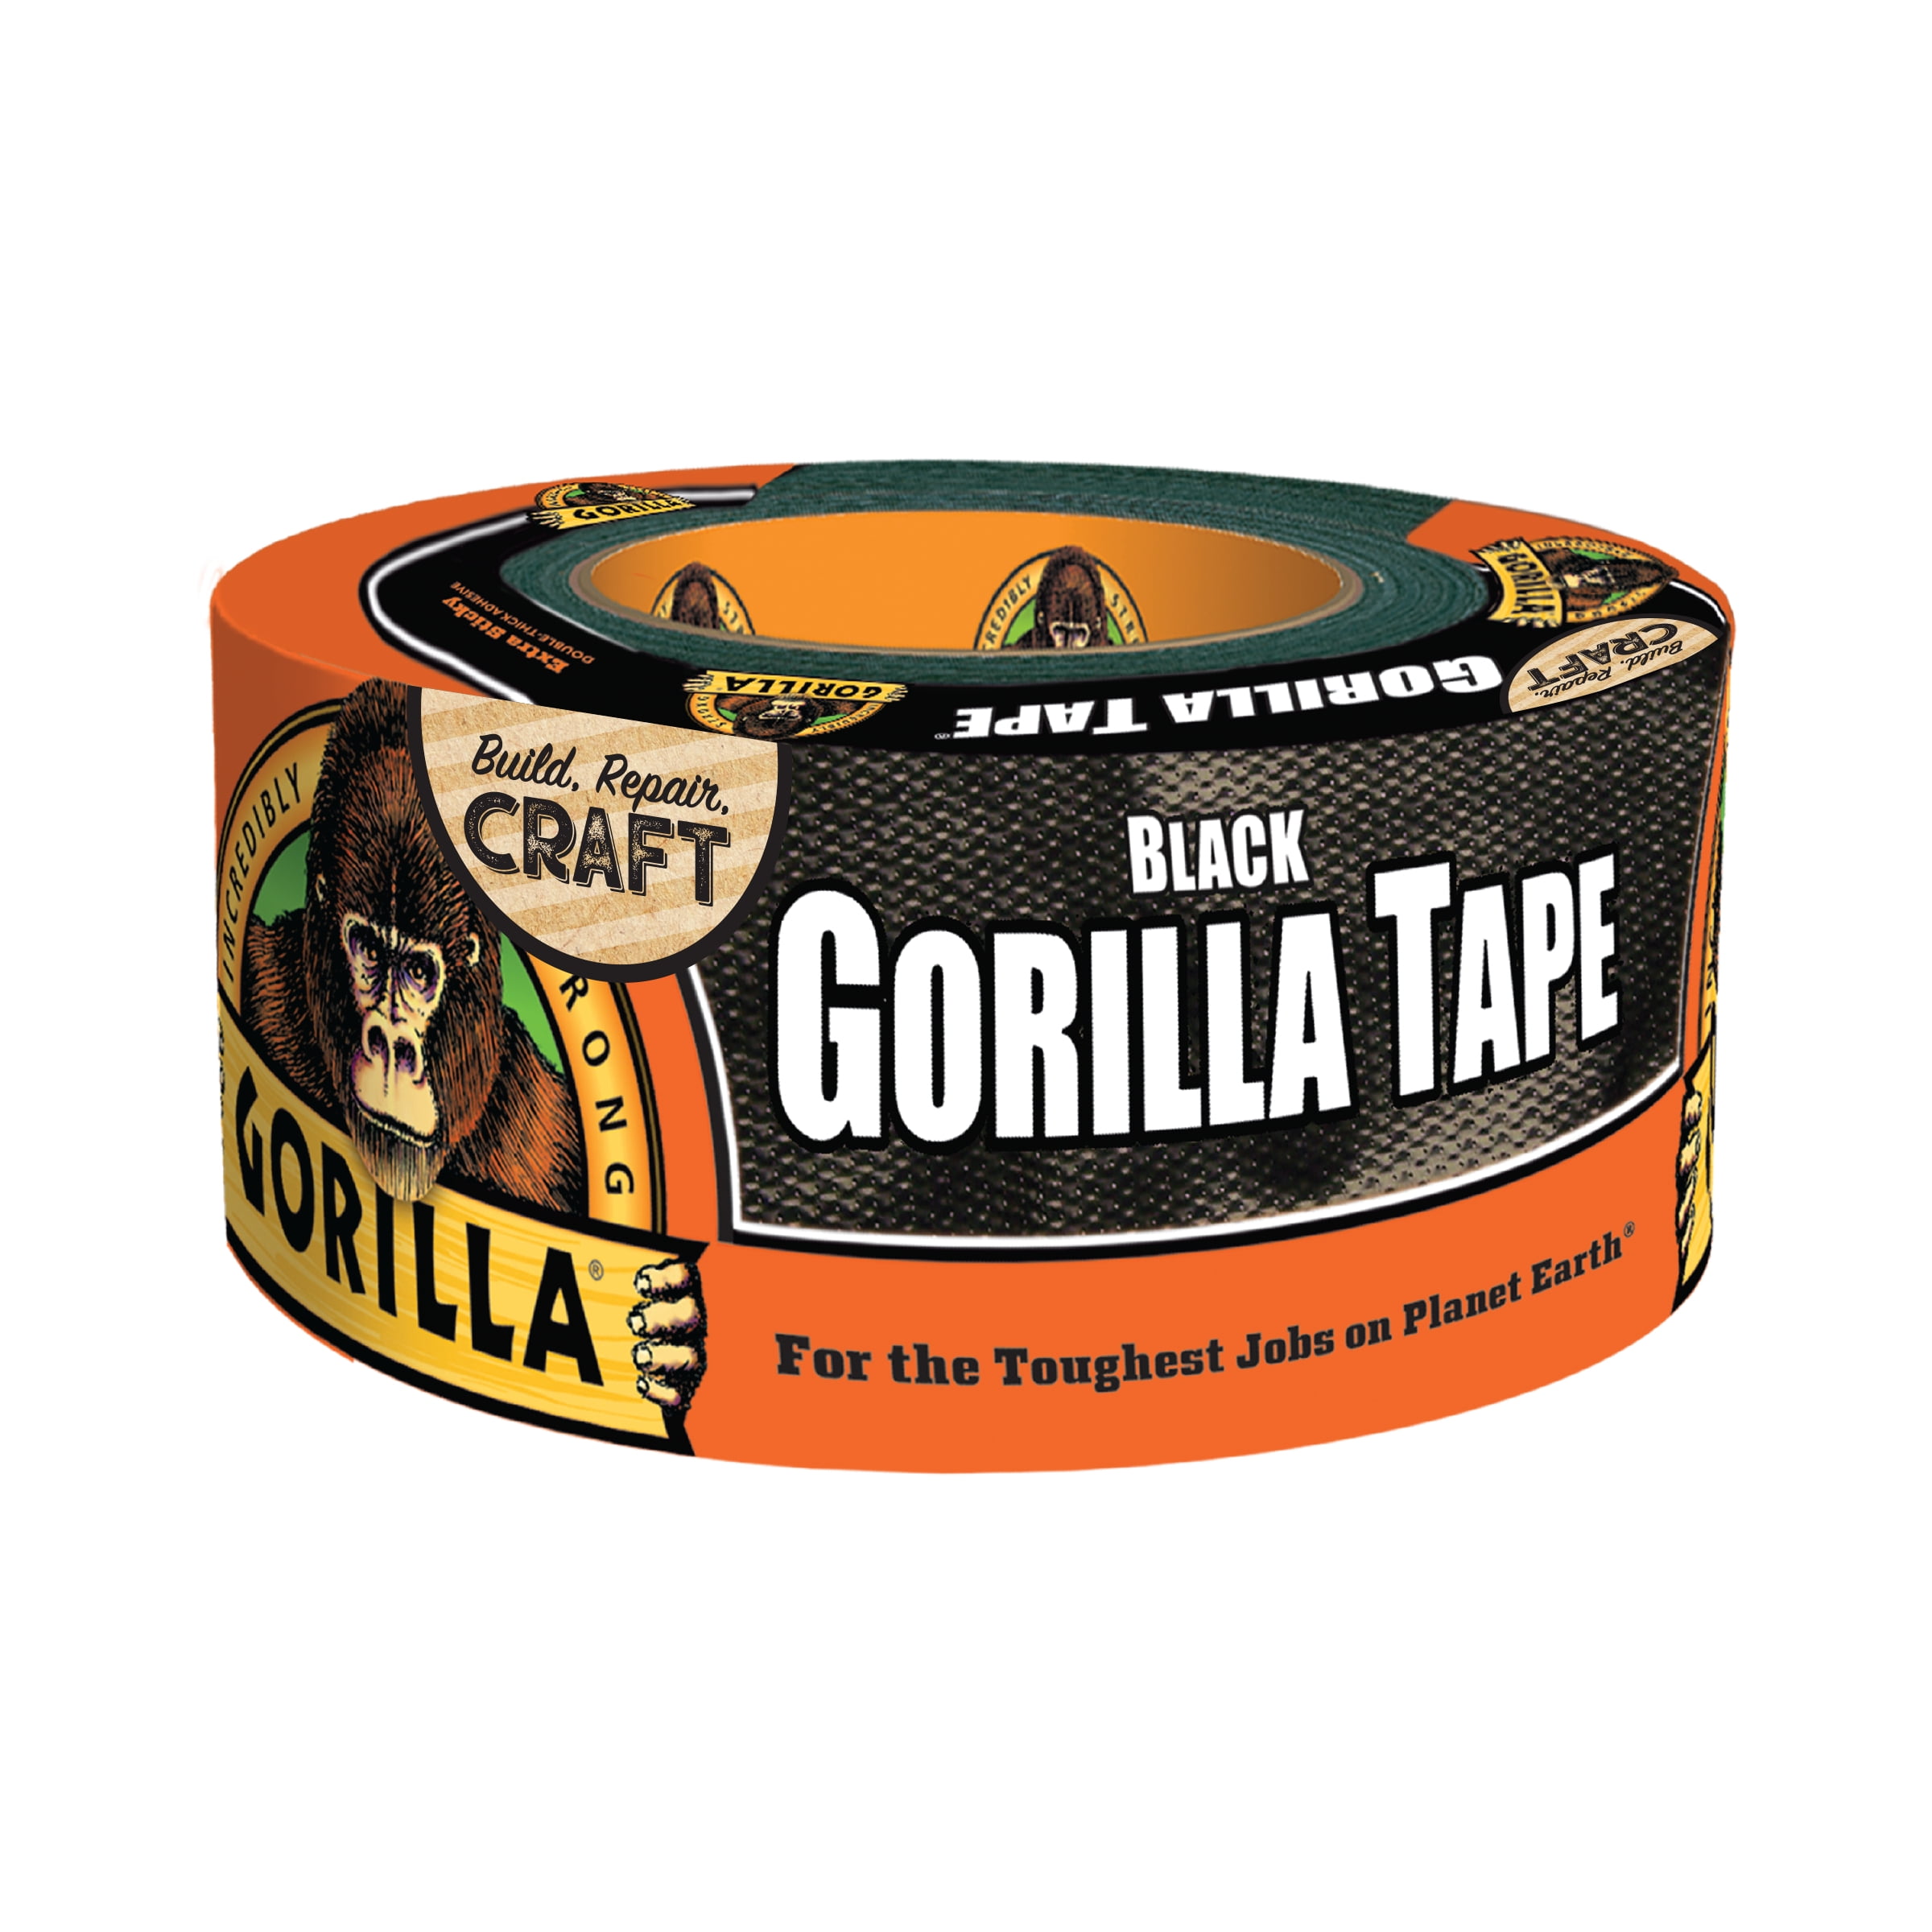 Double Side Tape Gorilla Glue 8 Yards